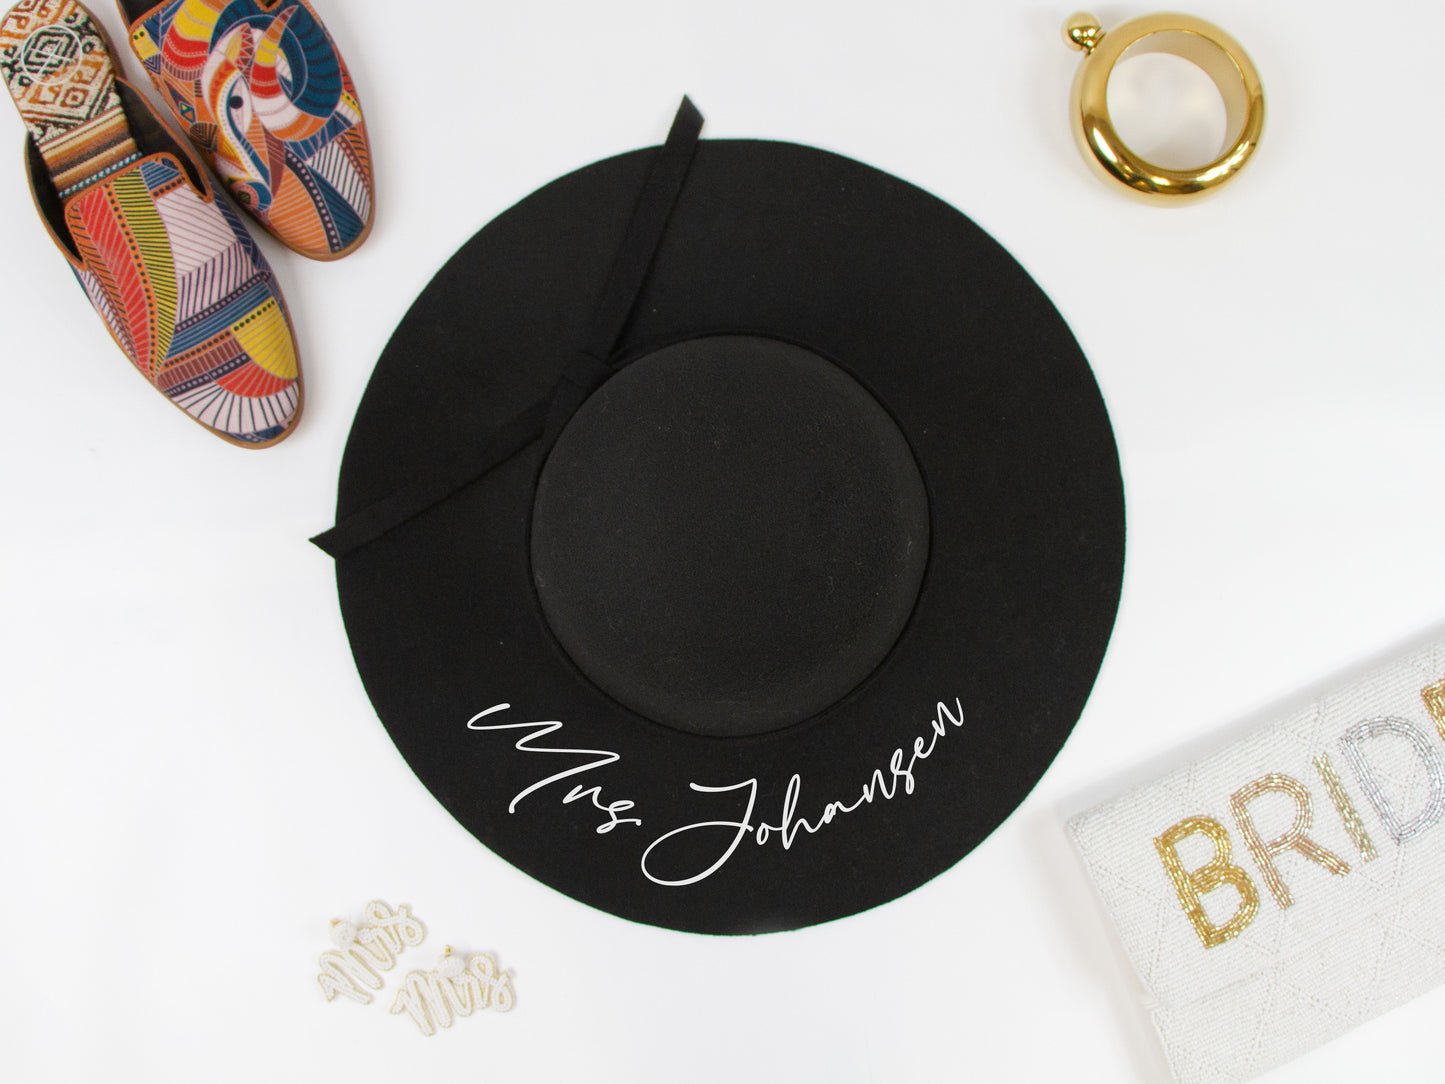 Custom Wedding Black Felt Sun Hat